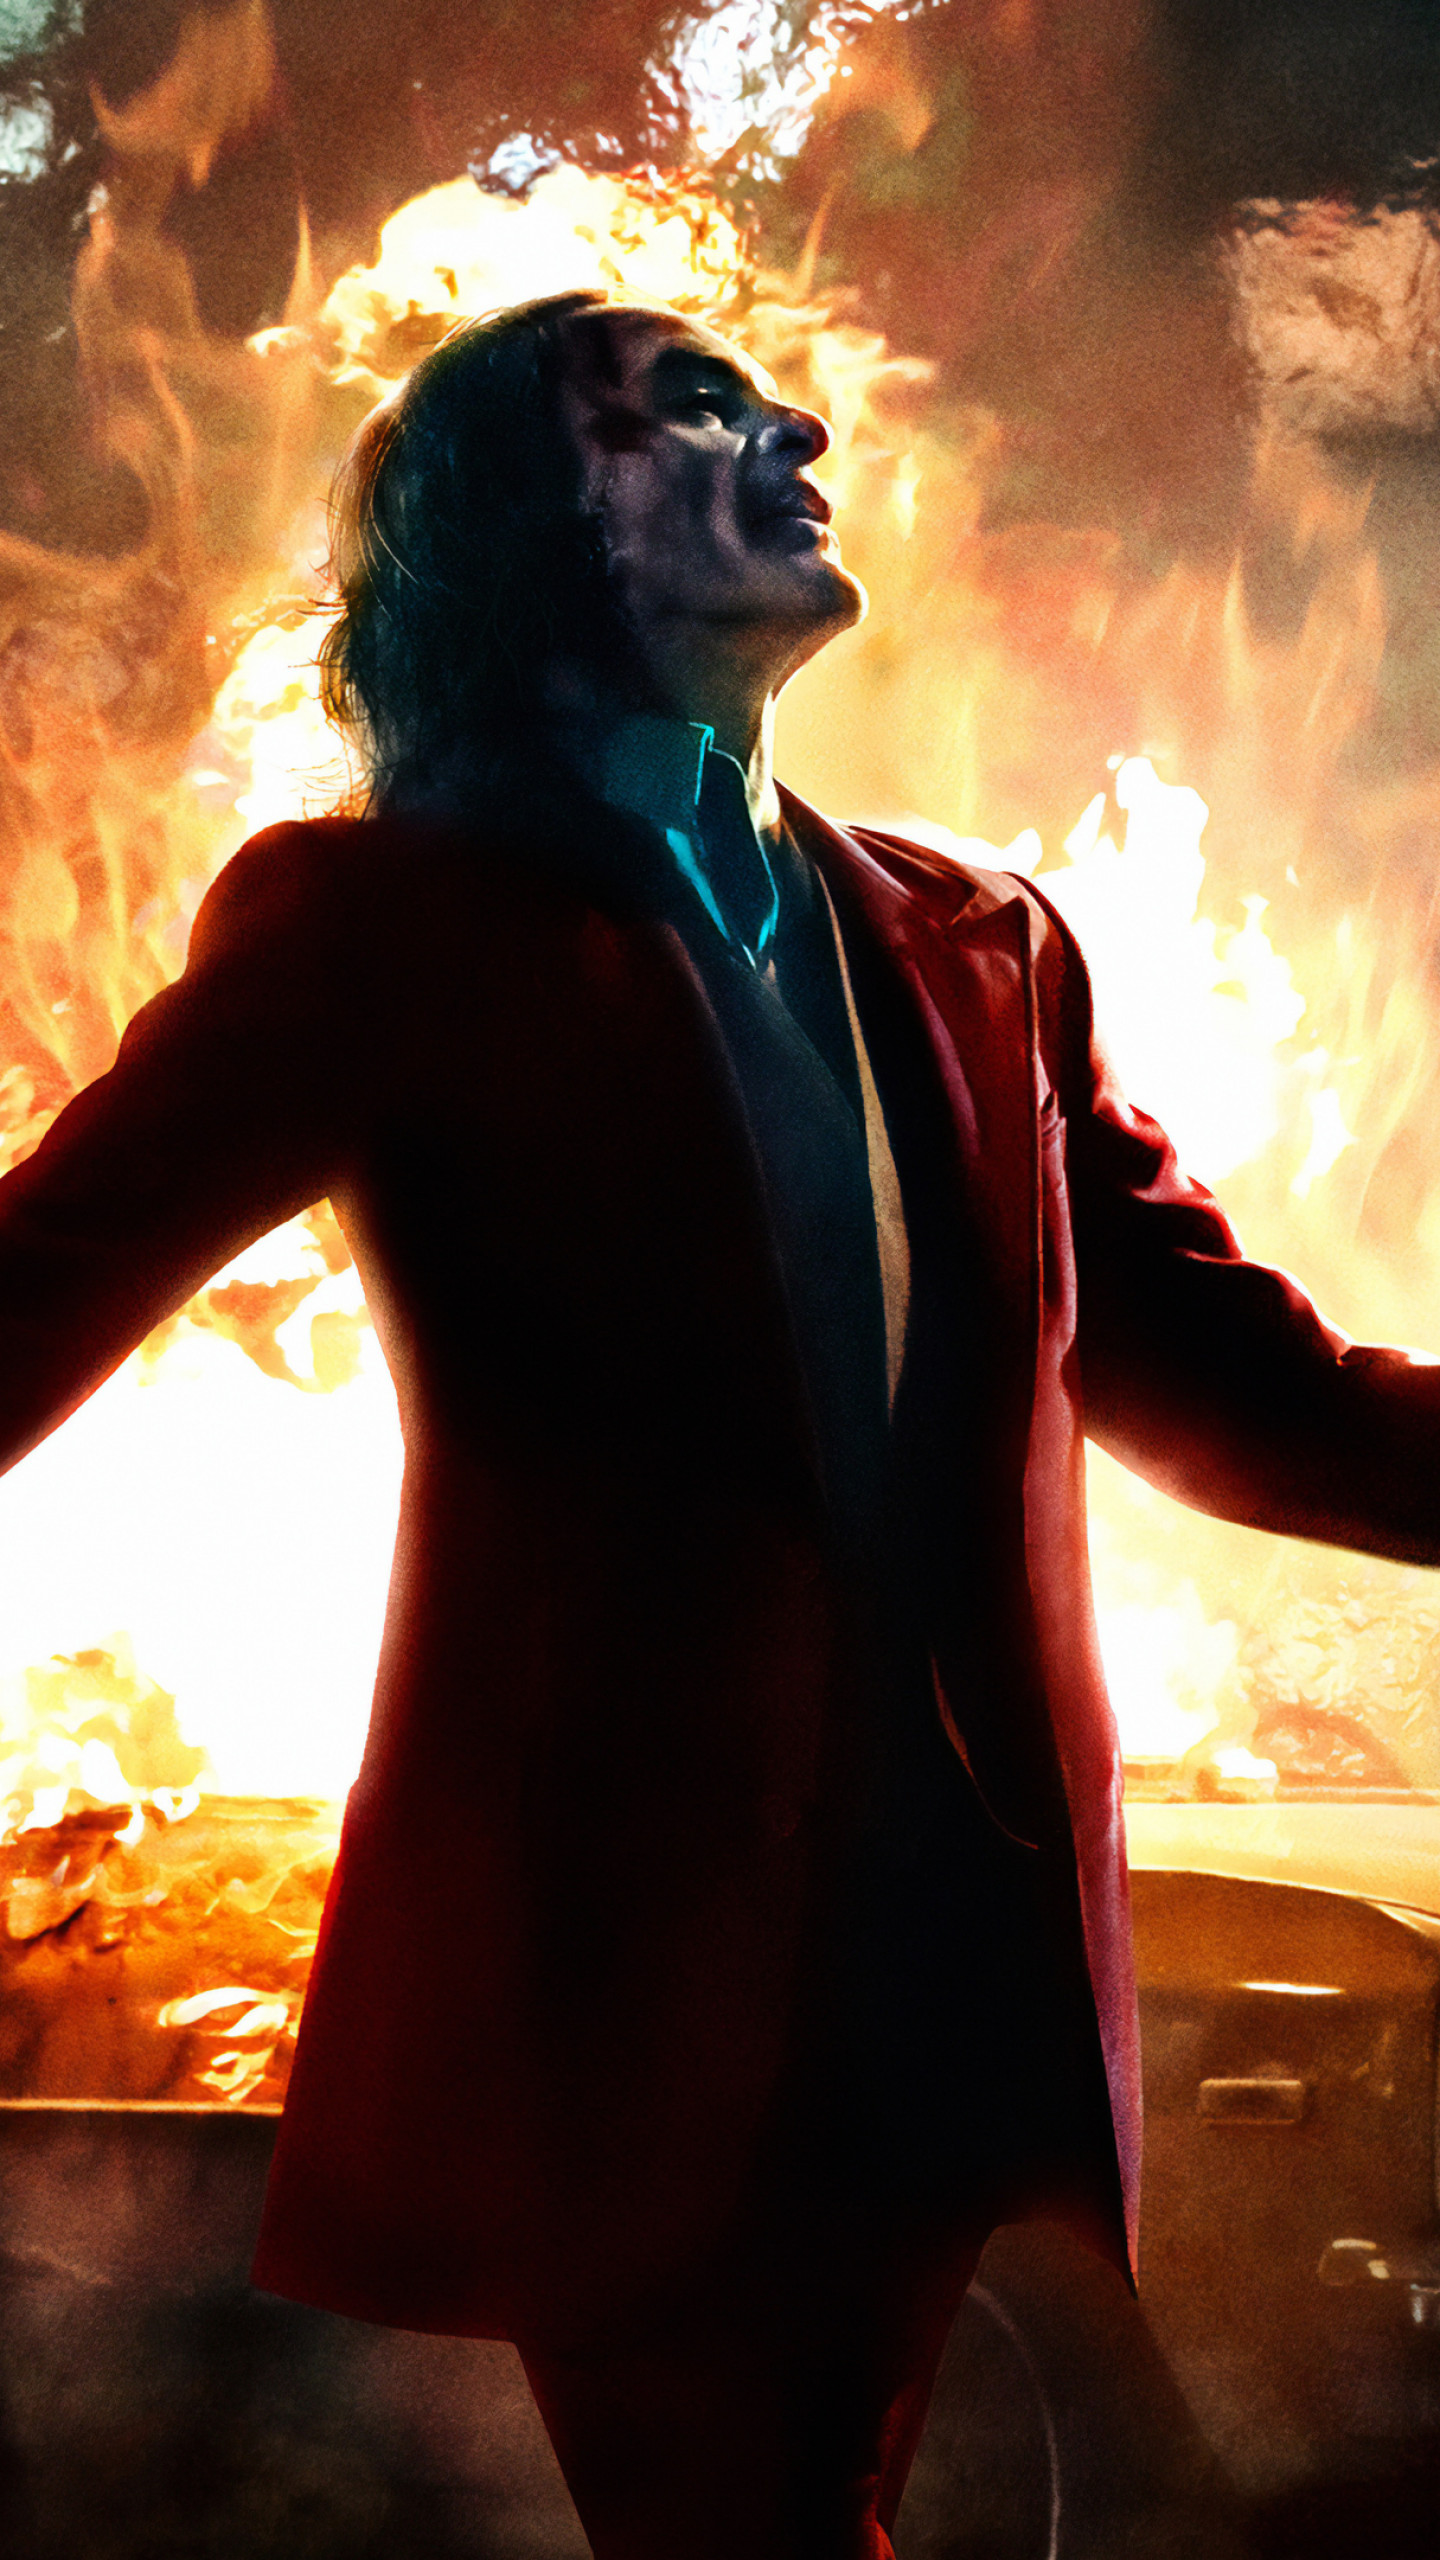  Wallpaper  Joker  Joaquin  Phoenix  poster 4K  Movies 22155